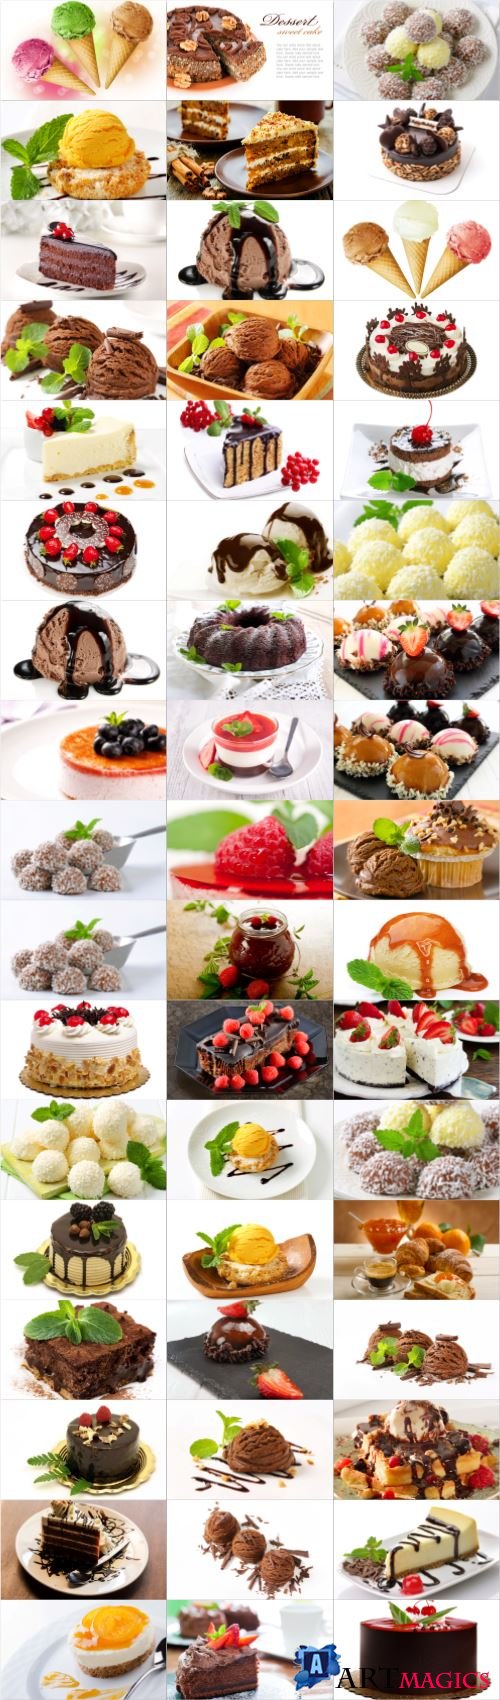 Desserts large selection stock photos